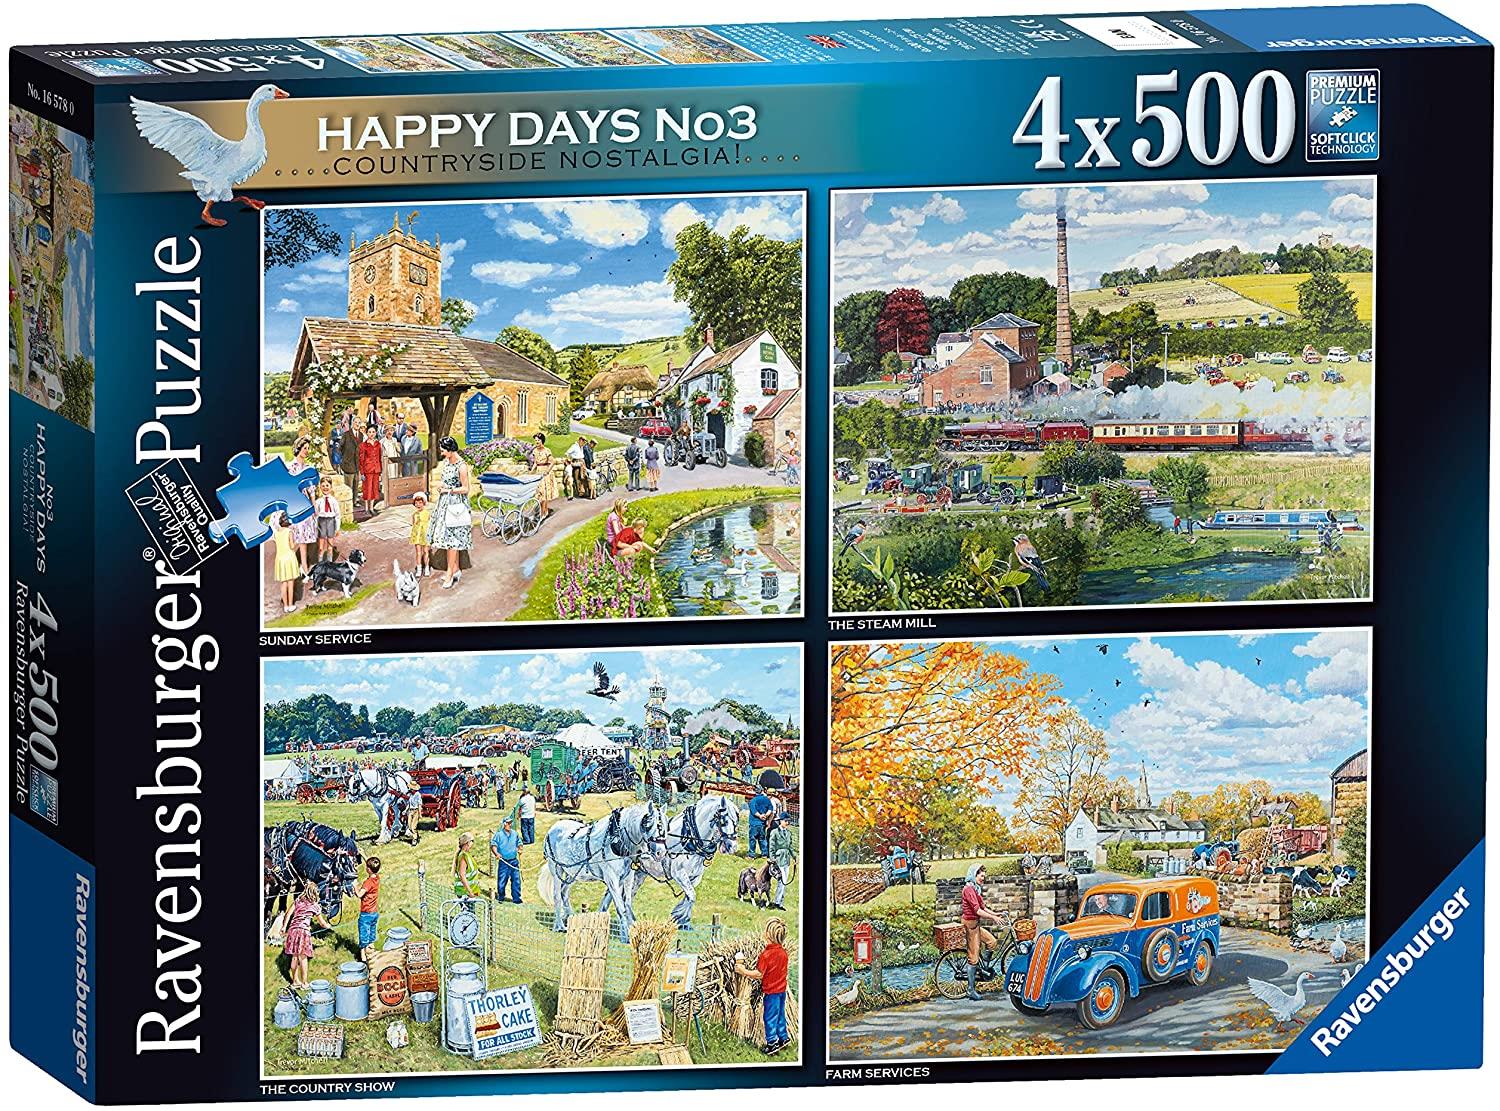 Ravensburger Happy Days No 3 Countryside Nostalgia Jigsaw Puzzles (4 x 500 Pieces)